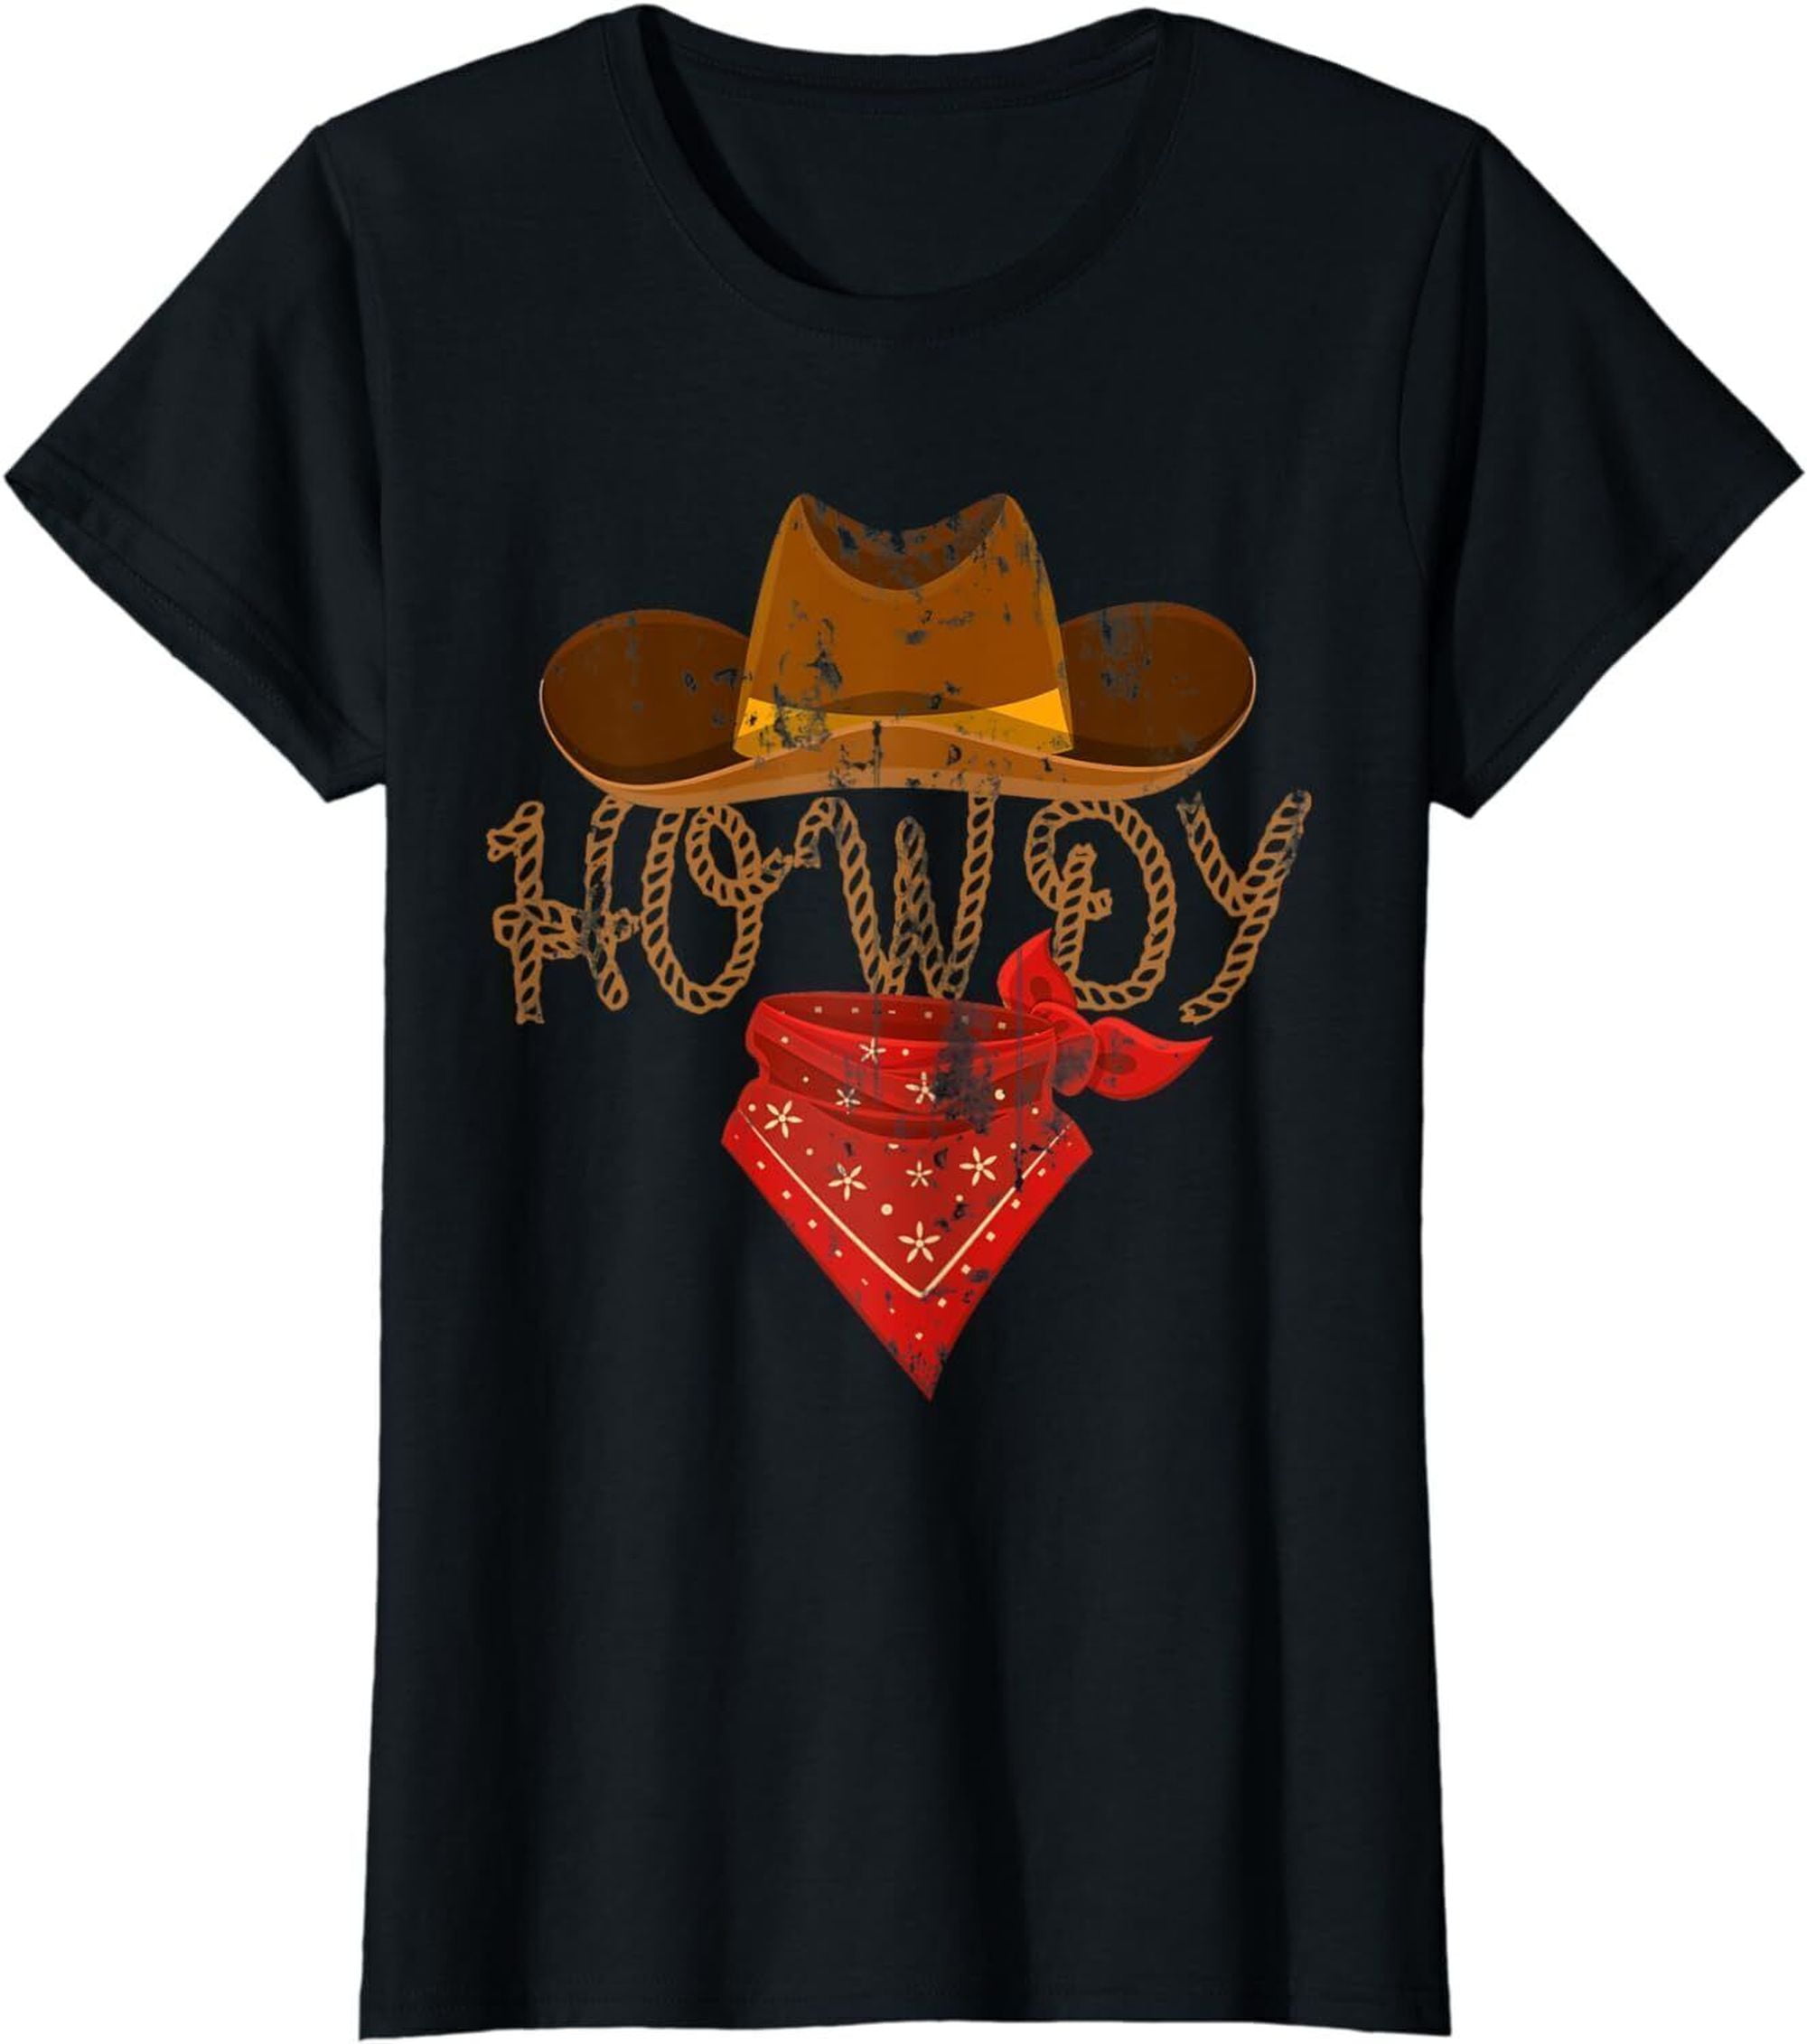 Retro Revival: Classic Western Cowboy Shirt with a Modern Twist ...